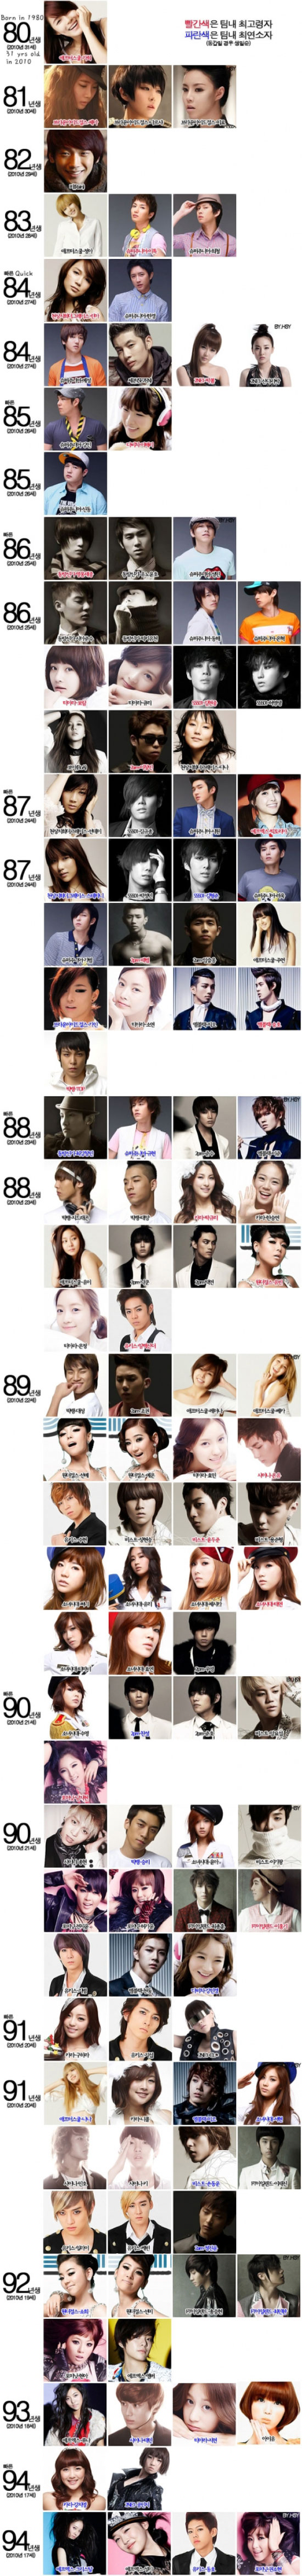 K-pop idols age chart